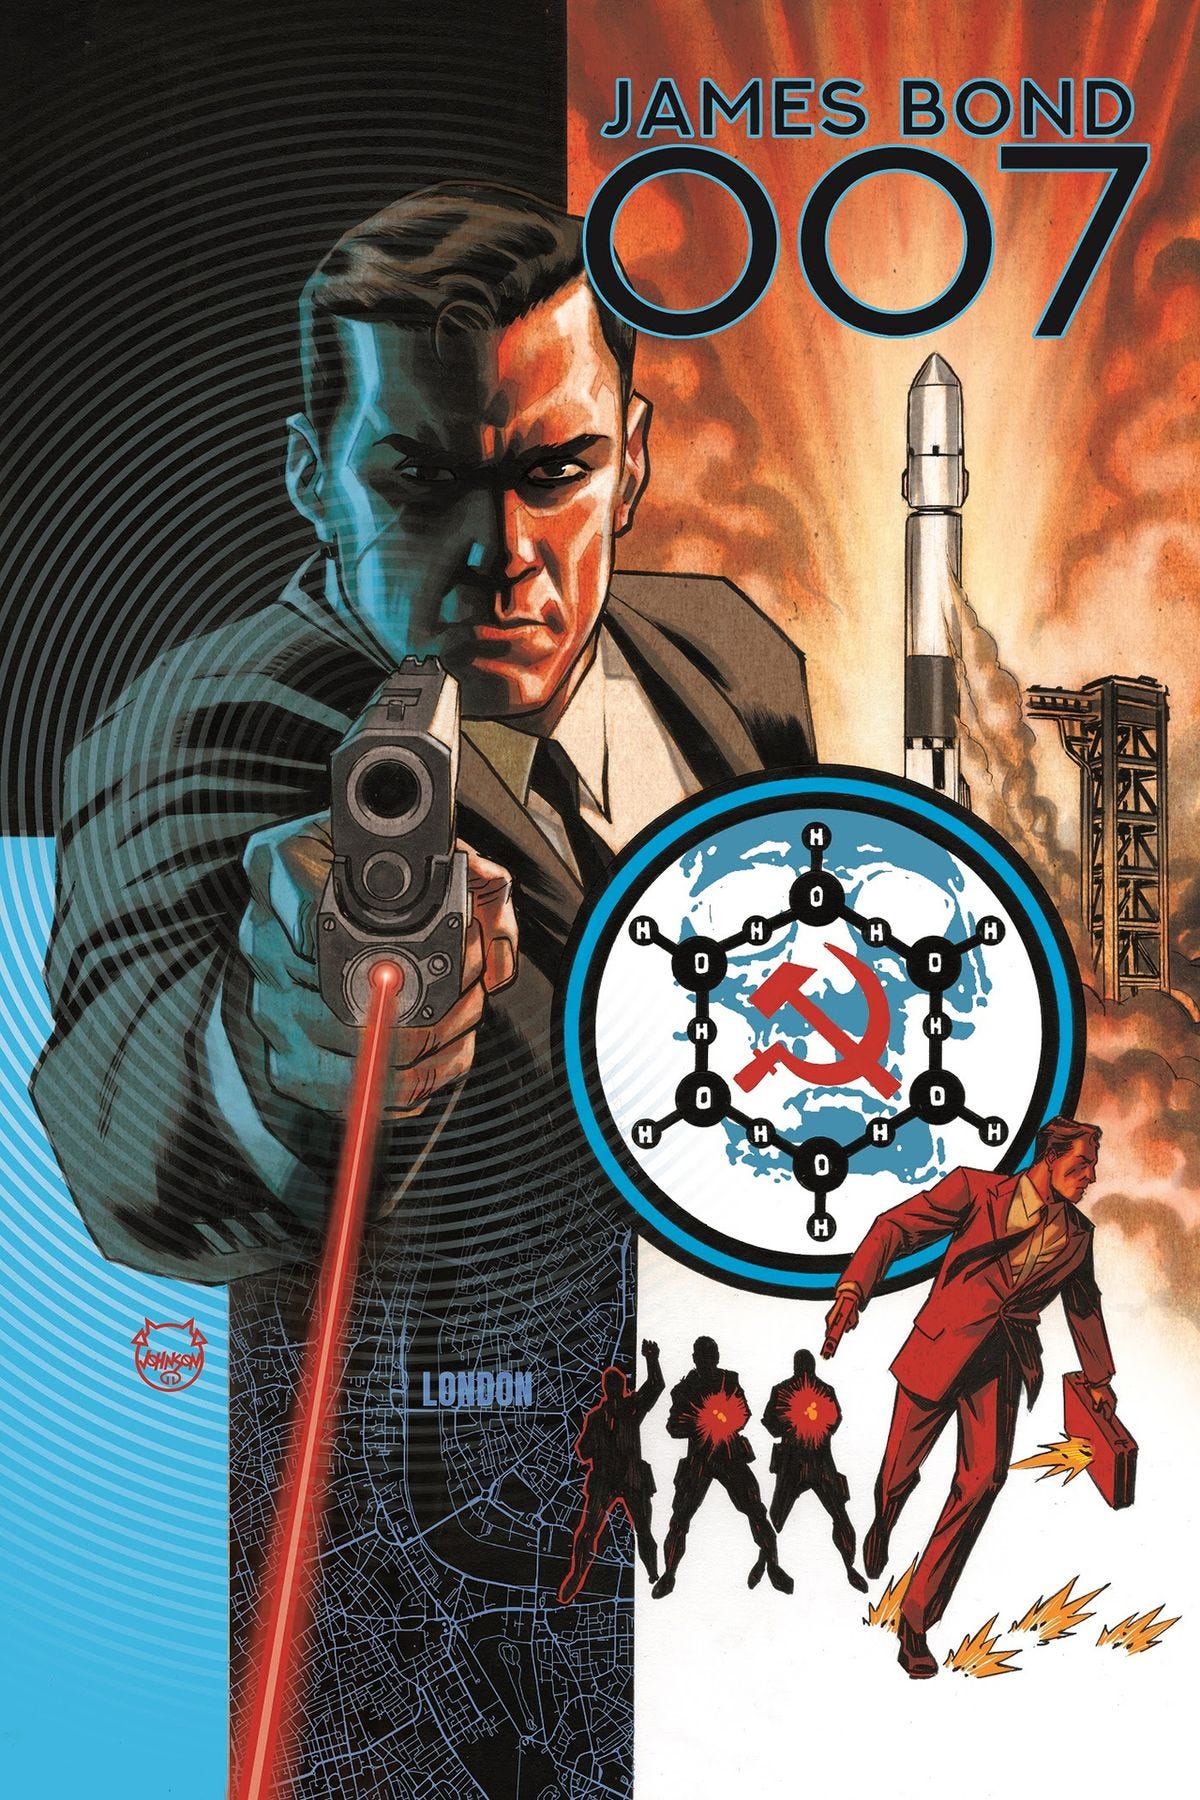 James Bond: 007 Vol. 2 Issue 001 by Gareth Ennis